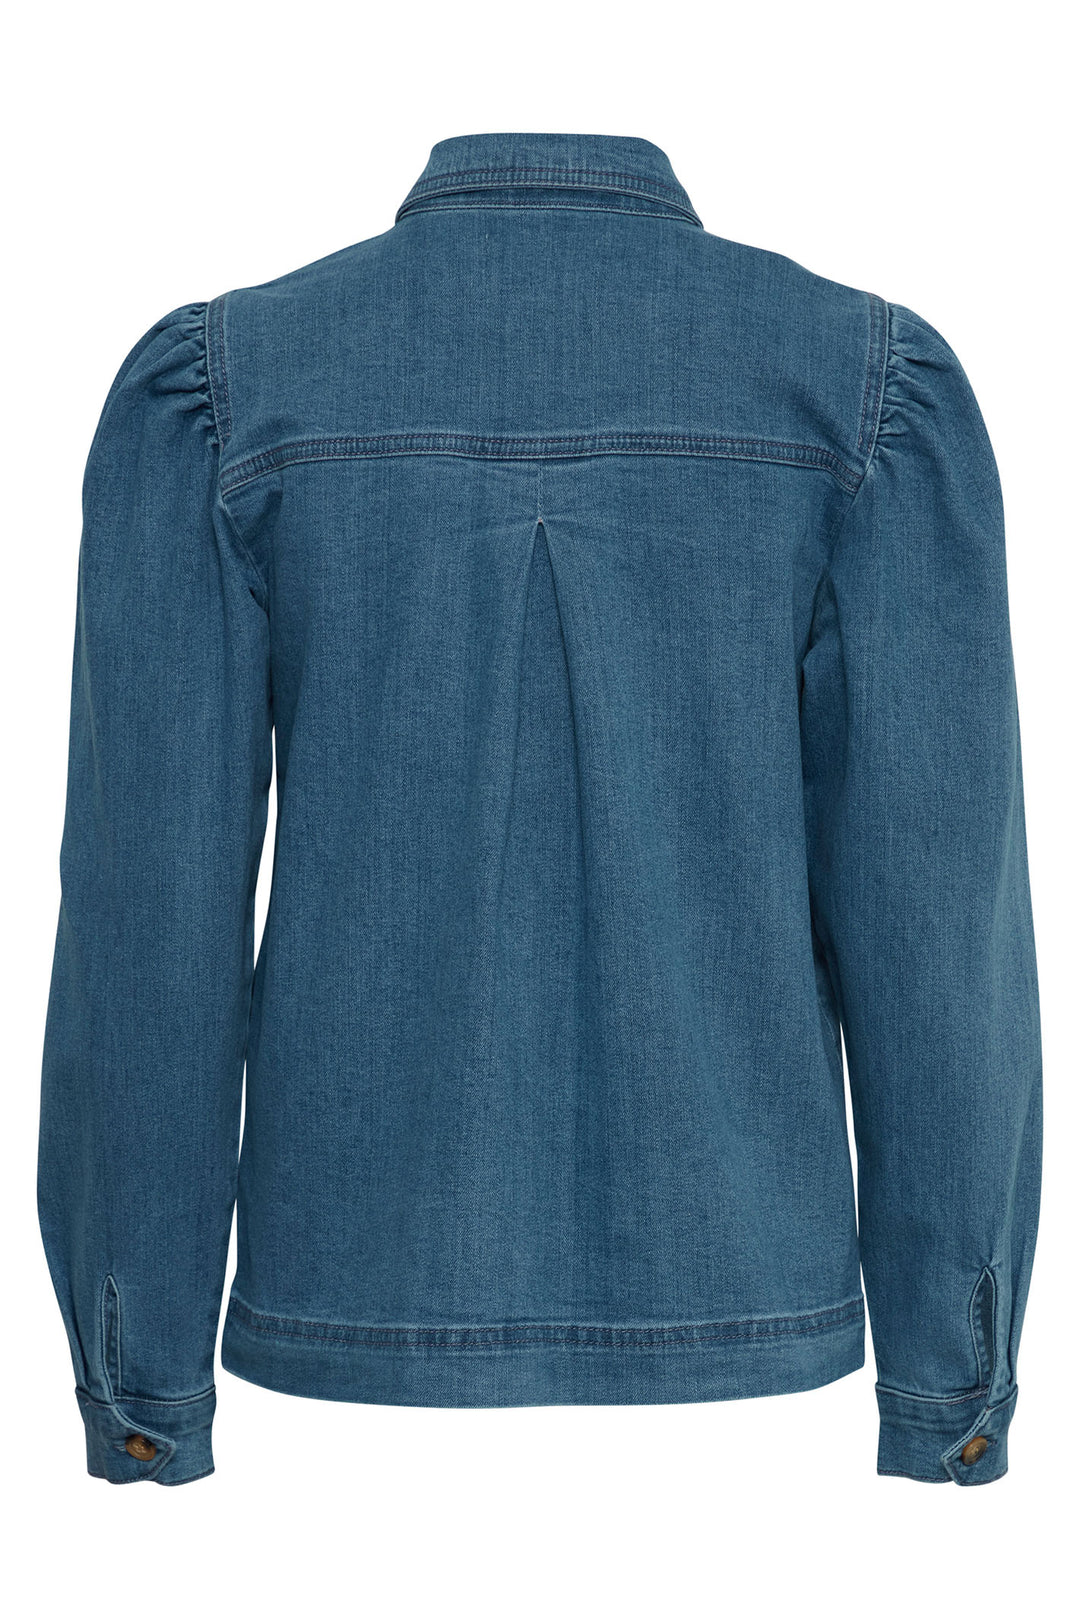 Atelier Reve 20119907 IRHARPER Medium Blue Washed Denim Shirt Jacket - Dotique Chesterfield